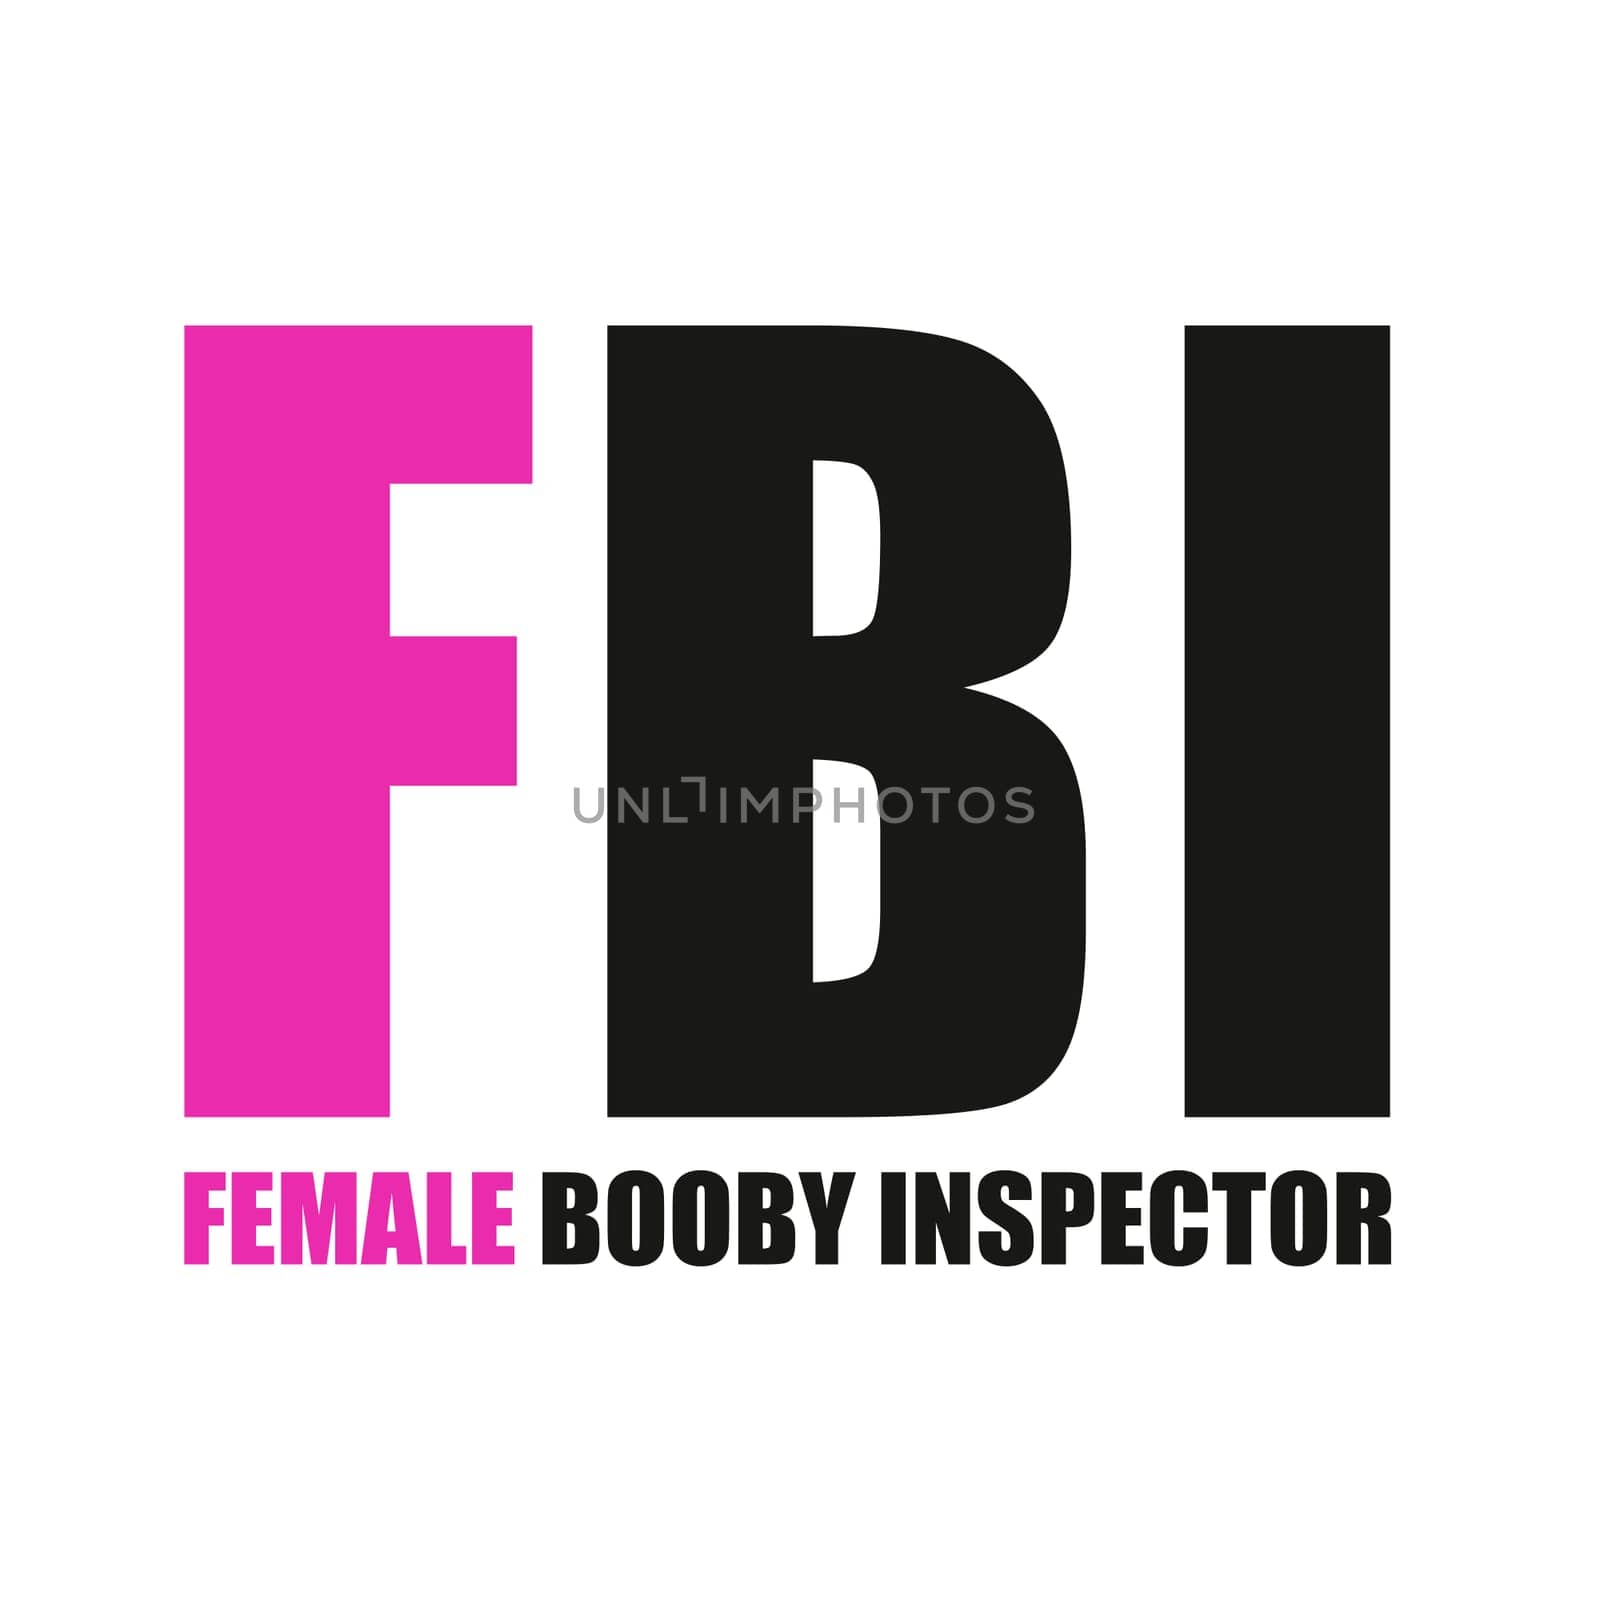 FBI Female Booby Inspector by Bigalbaloo